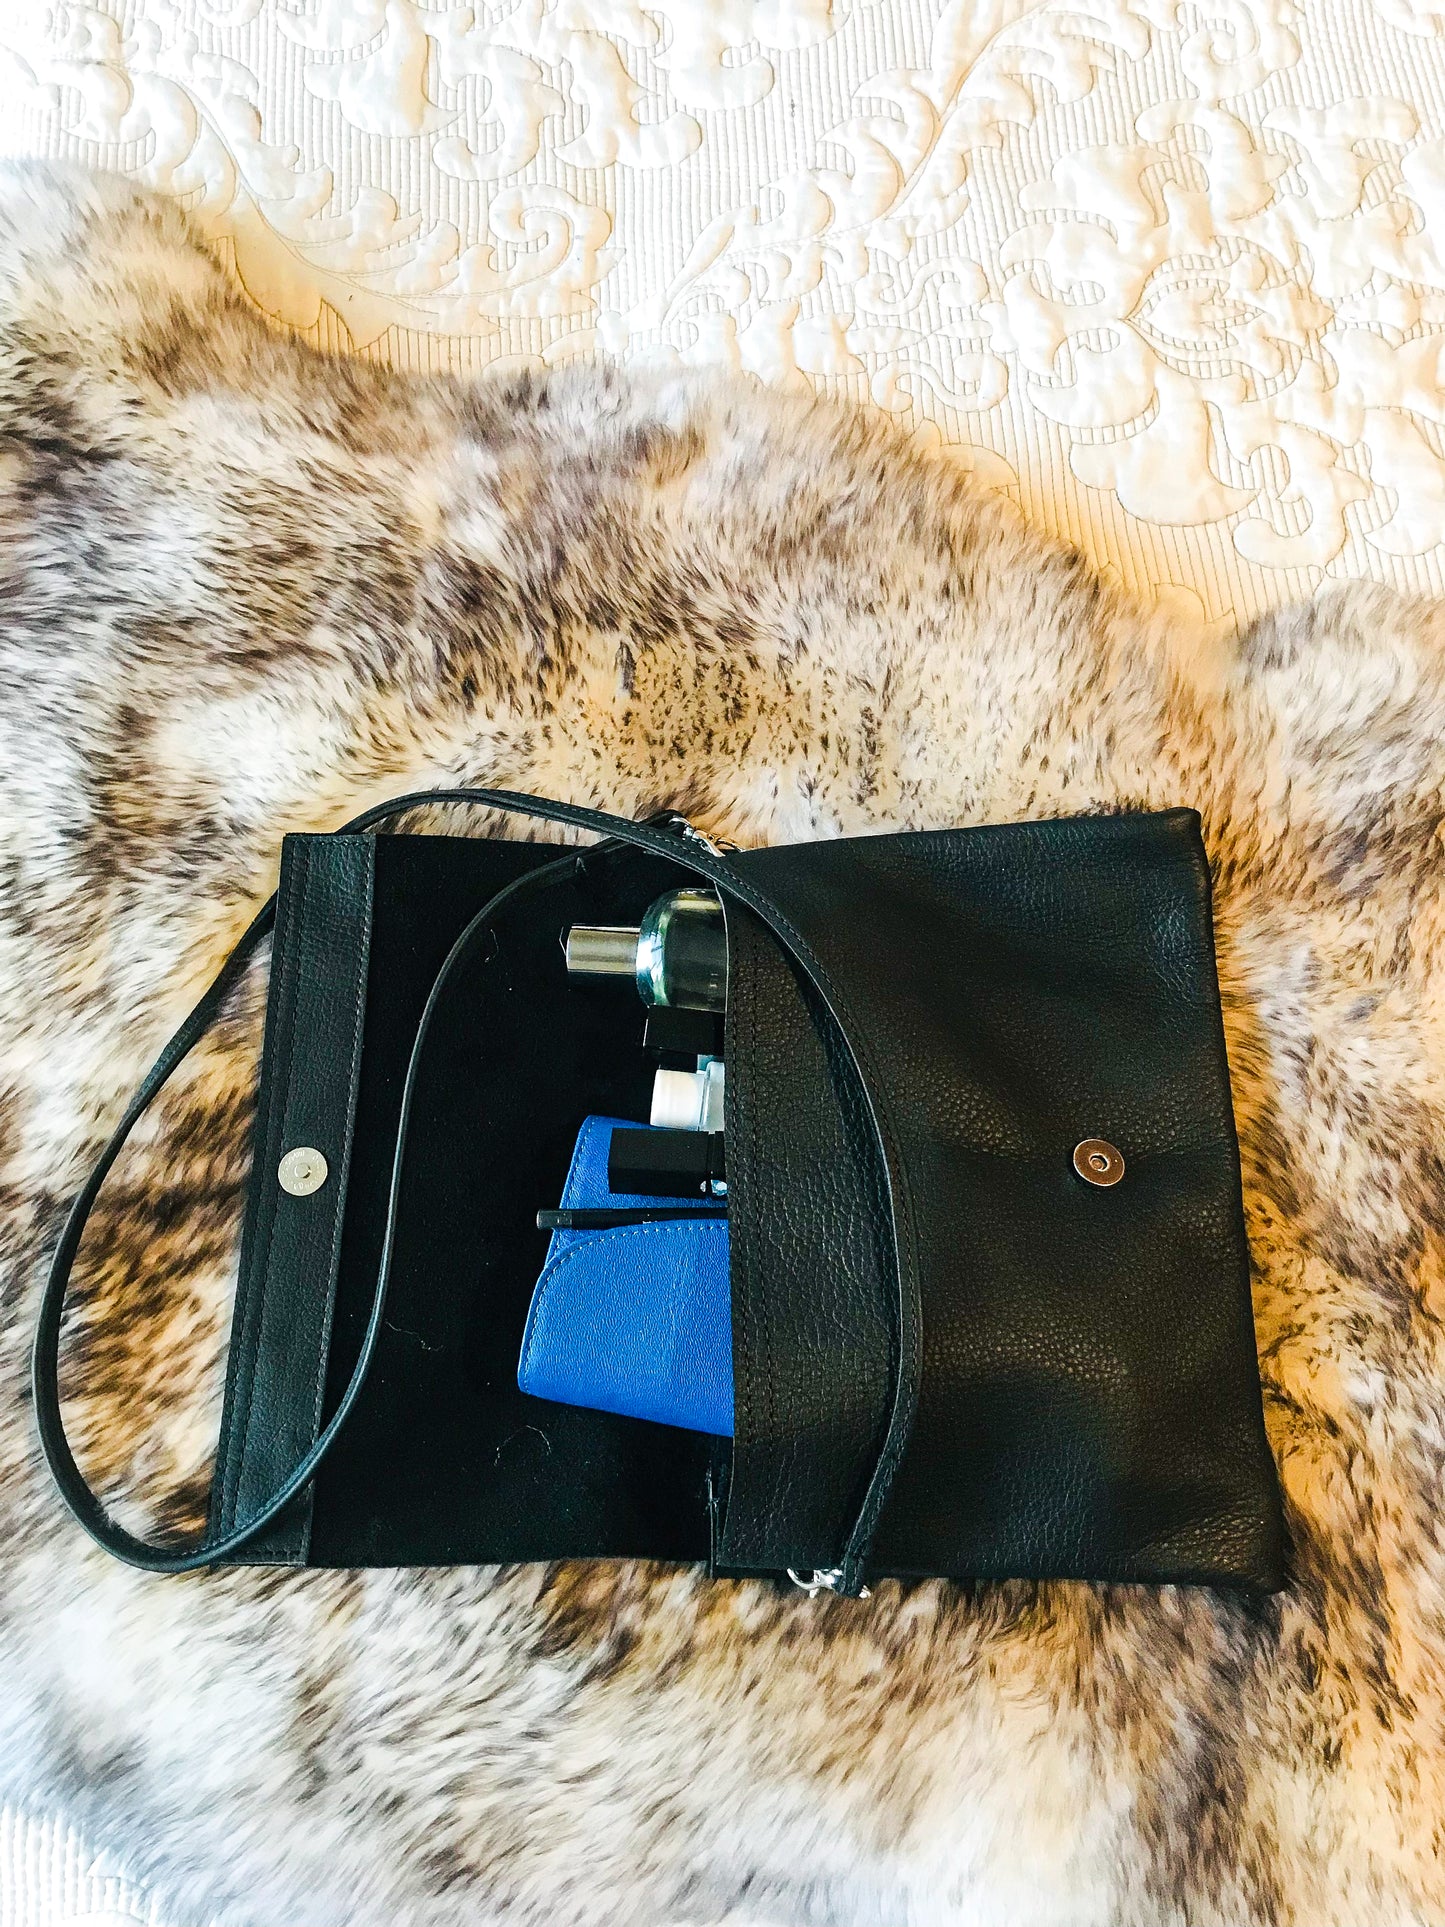 genuine leather black sling bag on sheepskin showing the inside of the bag 